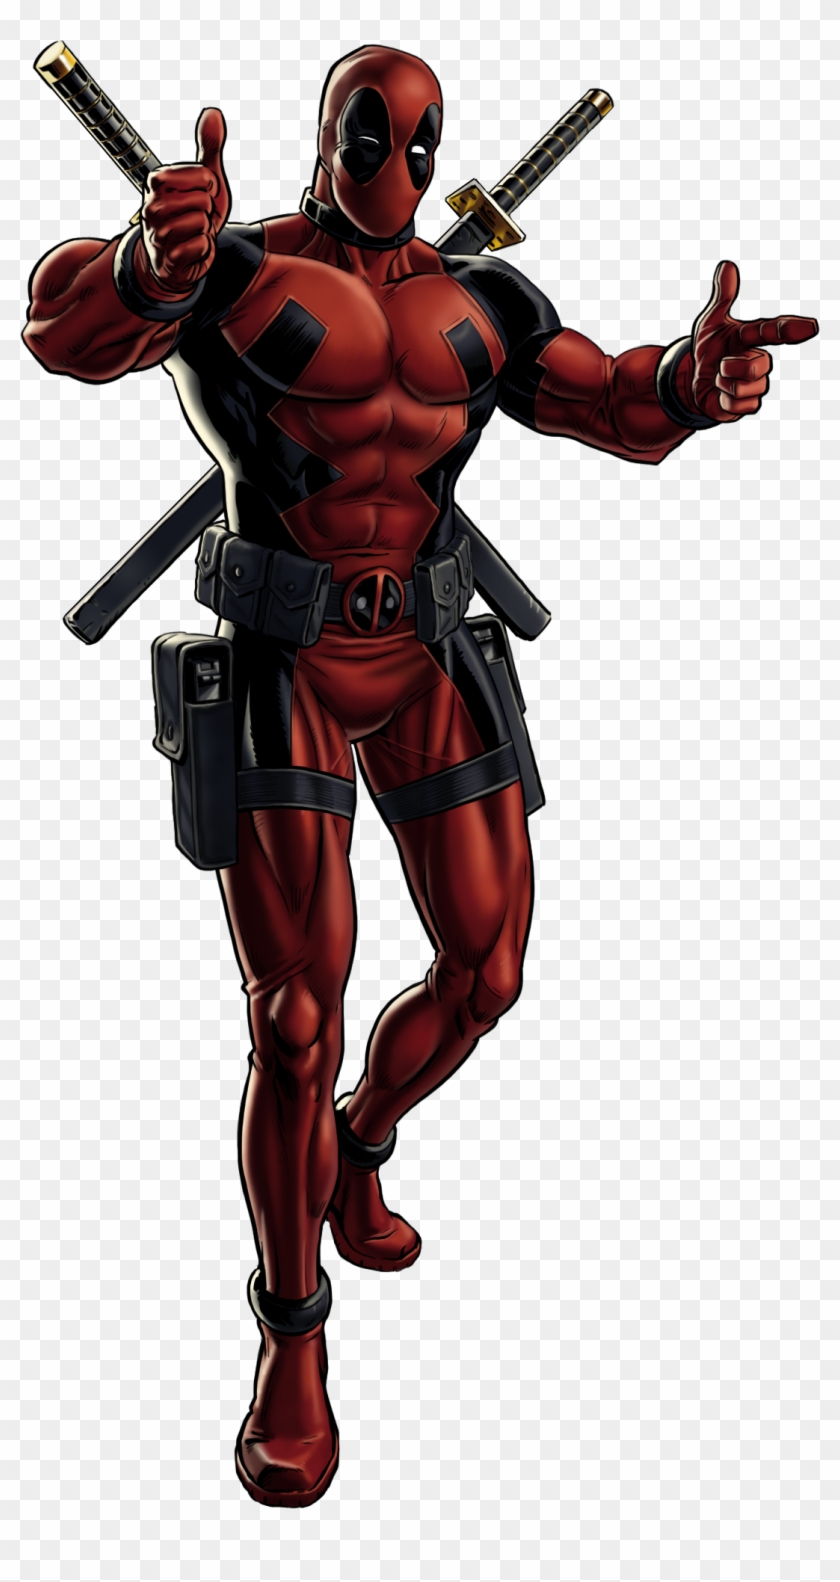 #deadpool #clip #art - Marvel Avengers Alliance Deadpool #268514